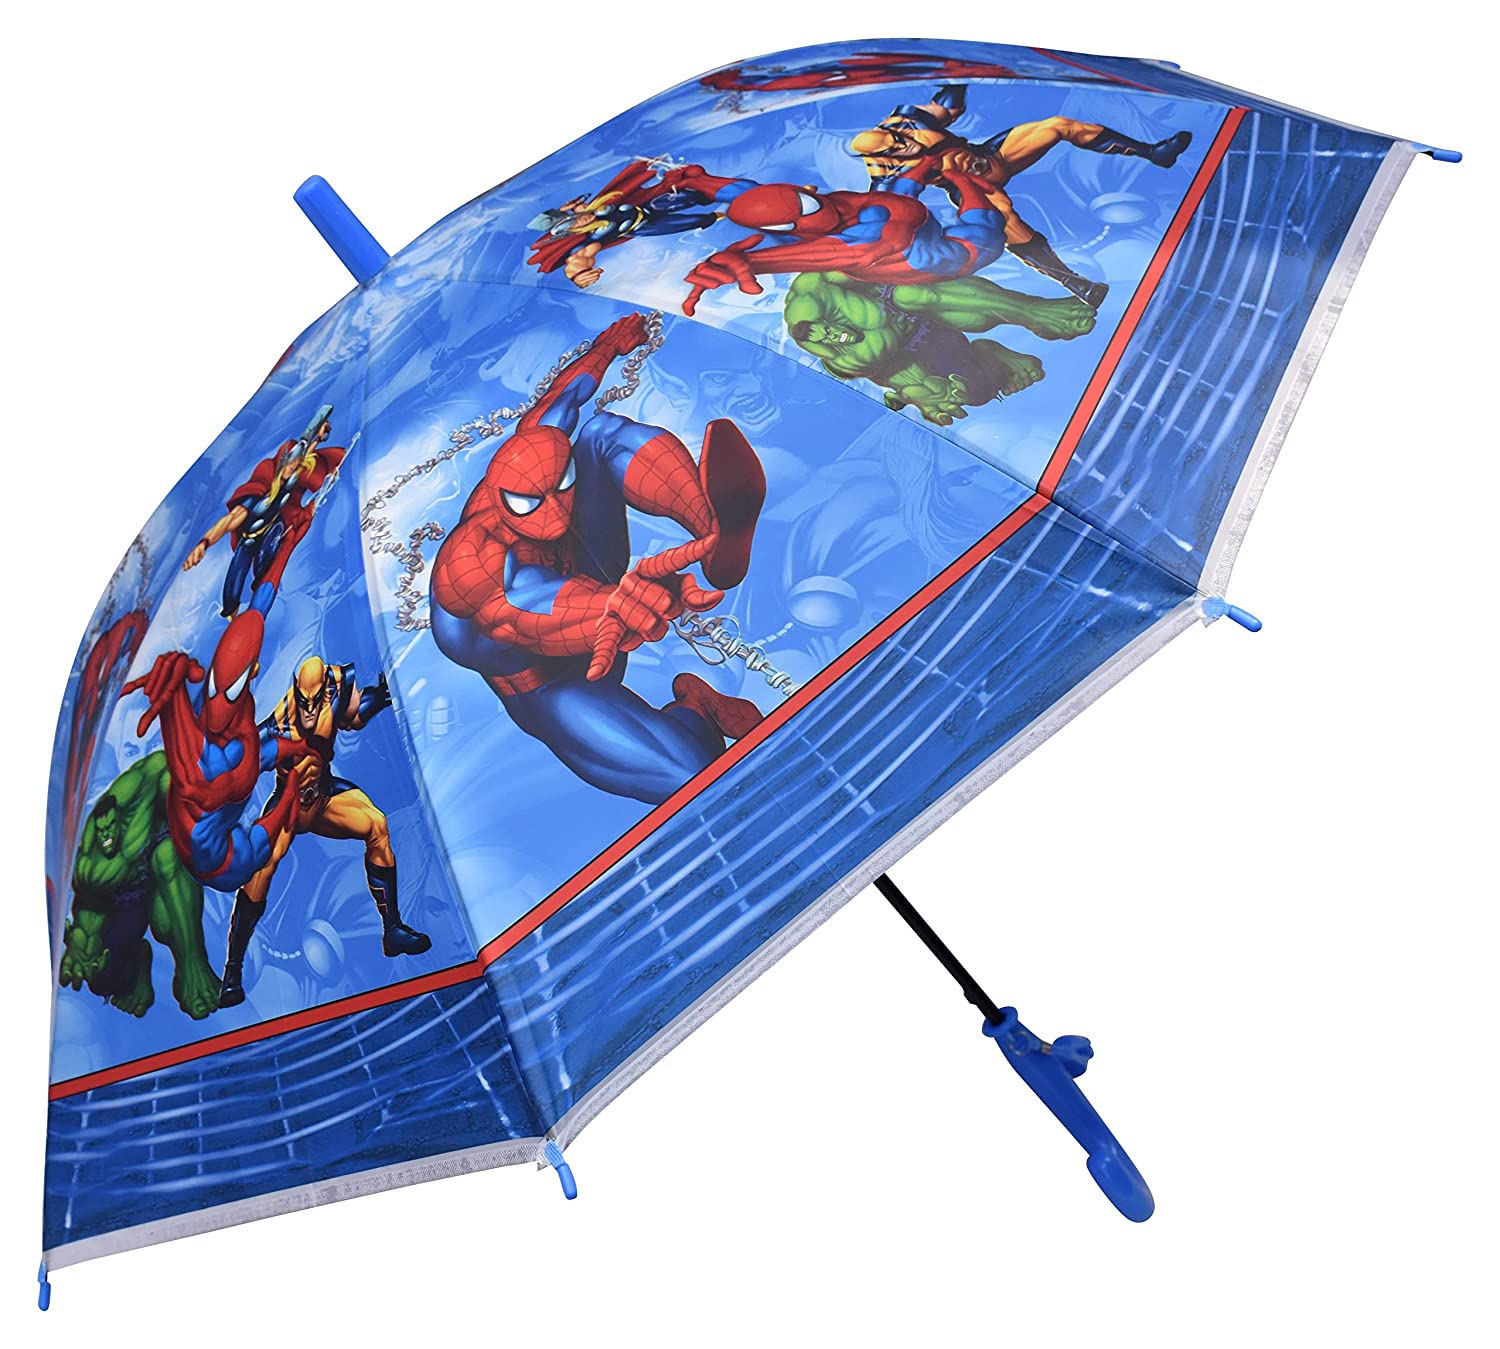 CHAATEWALA™ Flying Spiderman with Superhero Umbrella for children, spider-man umbrella for kids, Cartoon Print Rain Umbrella, Kids Umbrella, Spider Umbrella for Boys - Umbrella